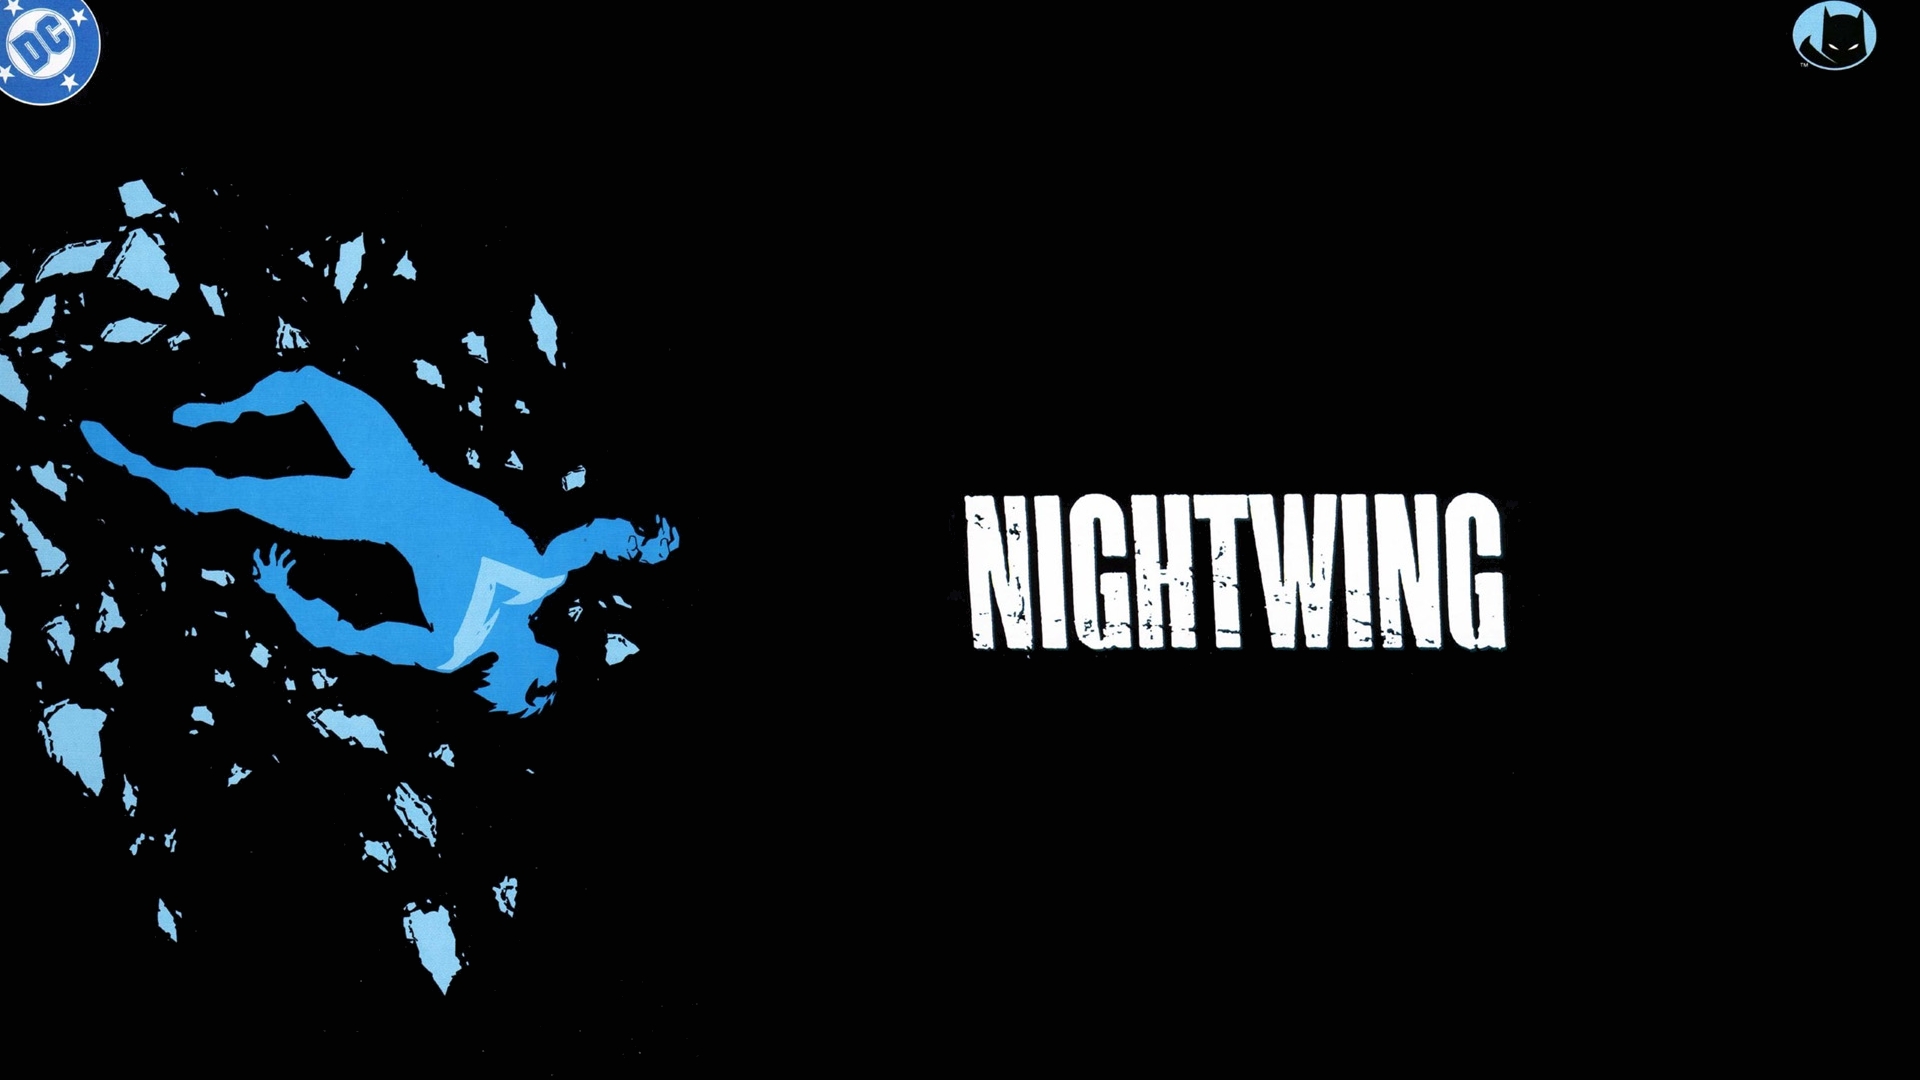 Nightwing Computer Wallpapers Desktop Backgrounds 1920x1080 ID